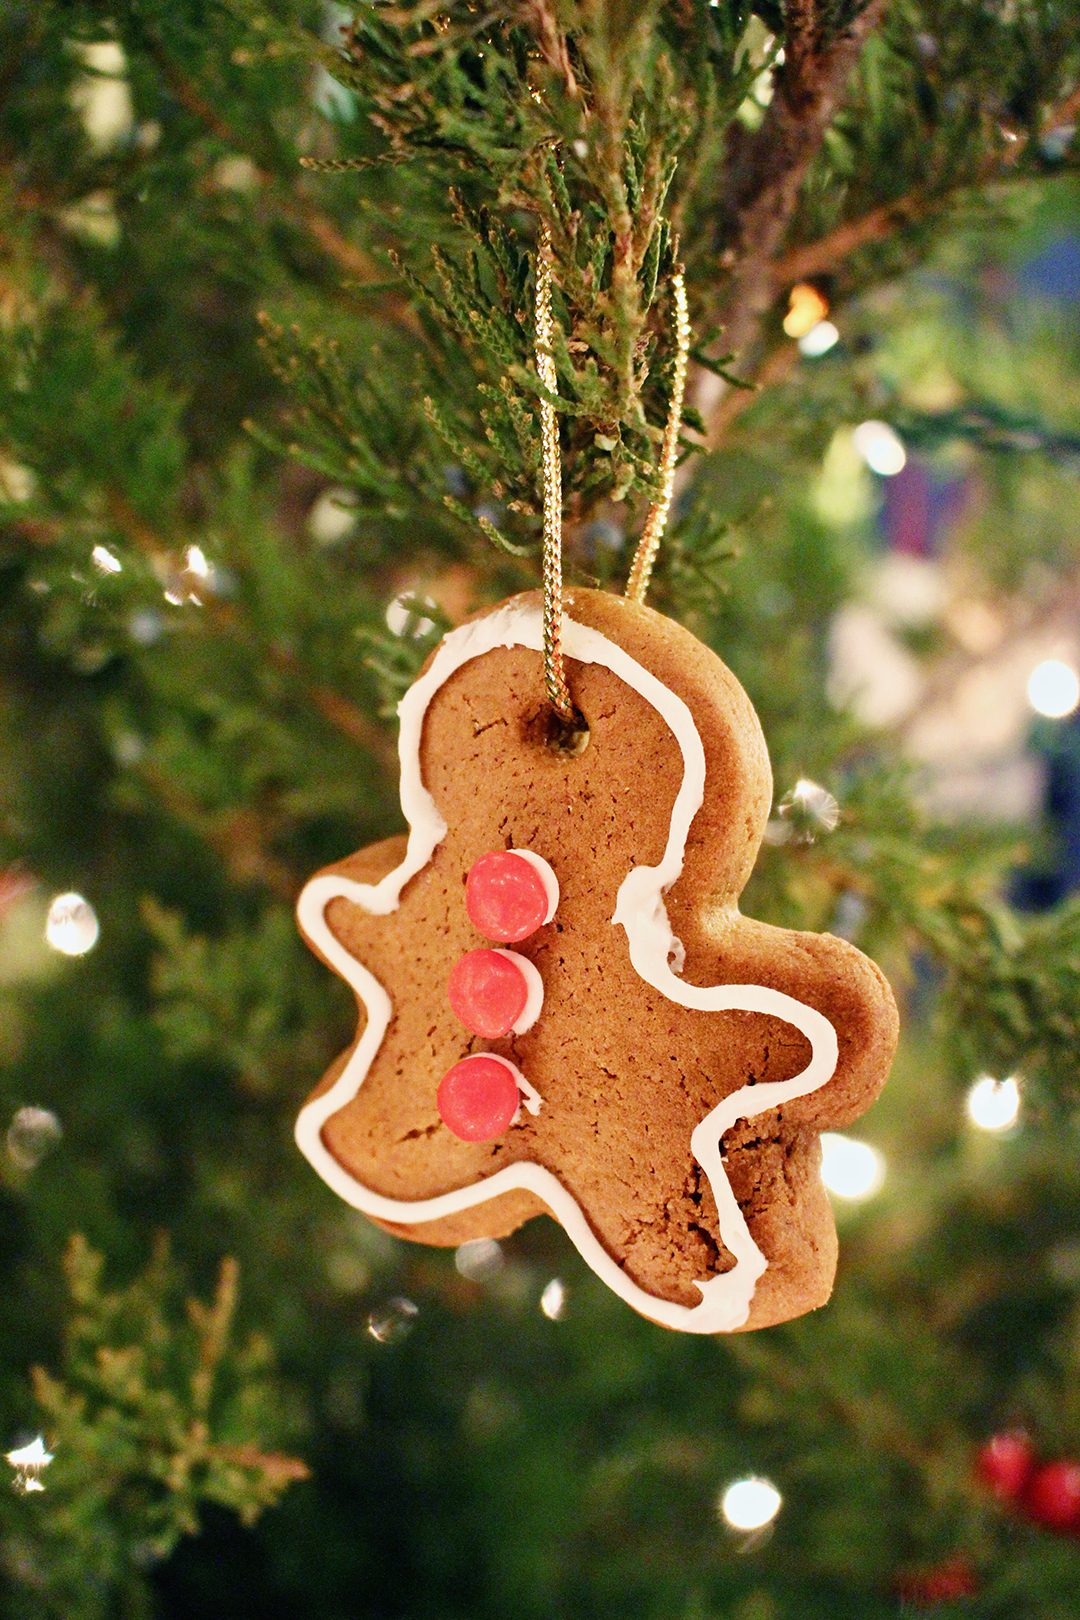 https://welcometonanas.com/wp-content/uploads/2019/12/Welcome-to-Nanas-Gingerbread-Man-Cookie-Christmas-Ornaments-DIY-tutorial-kids-crafts-easy-tree-2-1.jpg